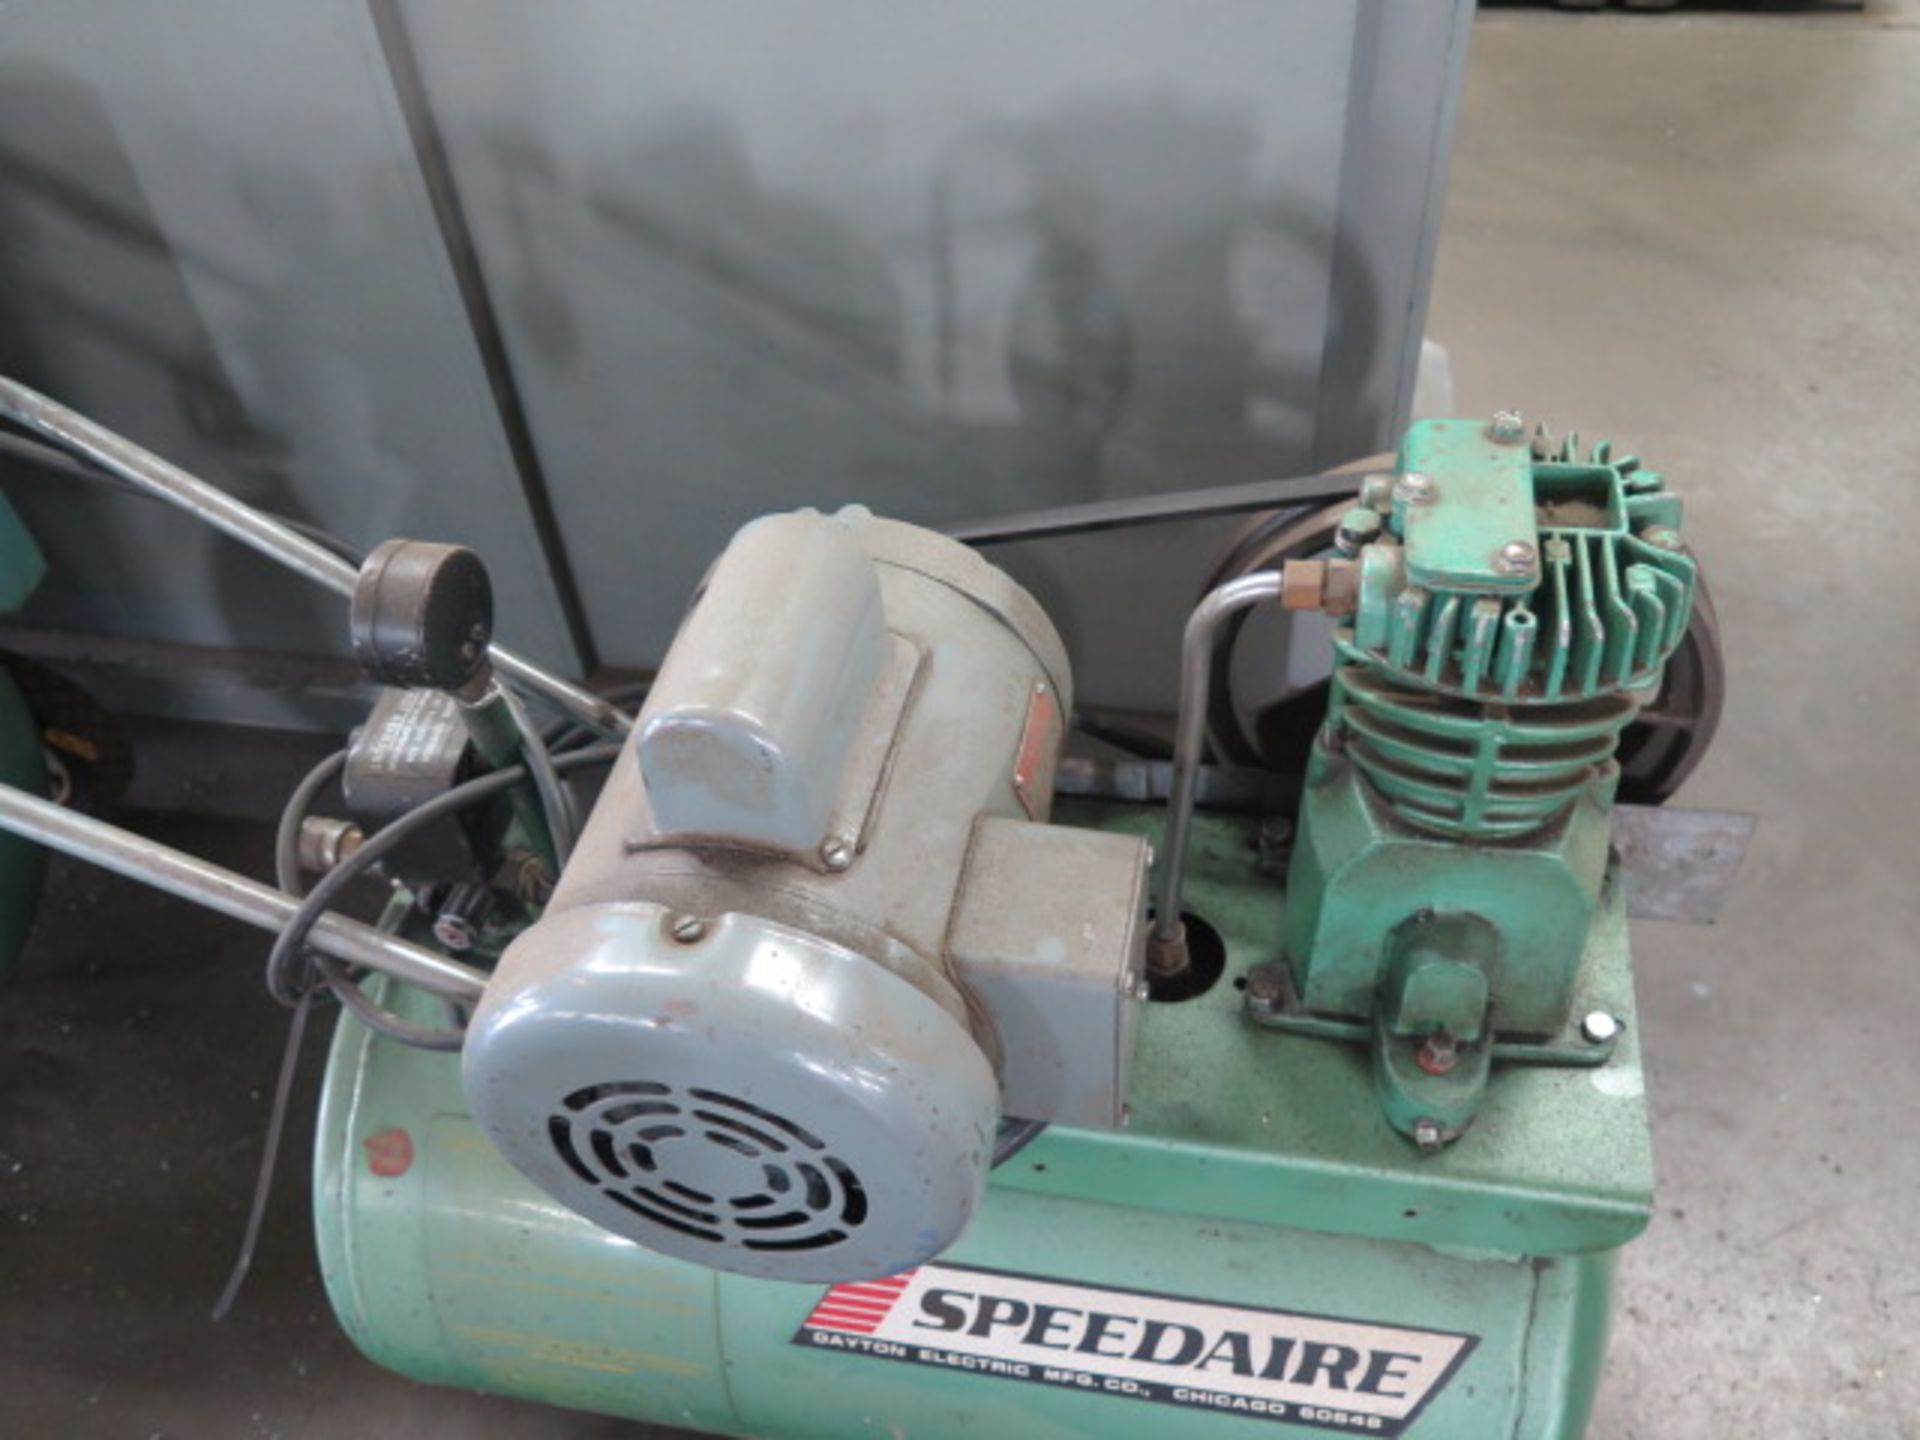 Speedaire Portable Air Compressor (SOLD AS-IS - NO WARRANTY) - Image 2 of 3